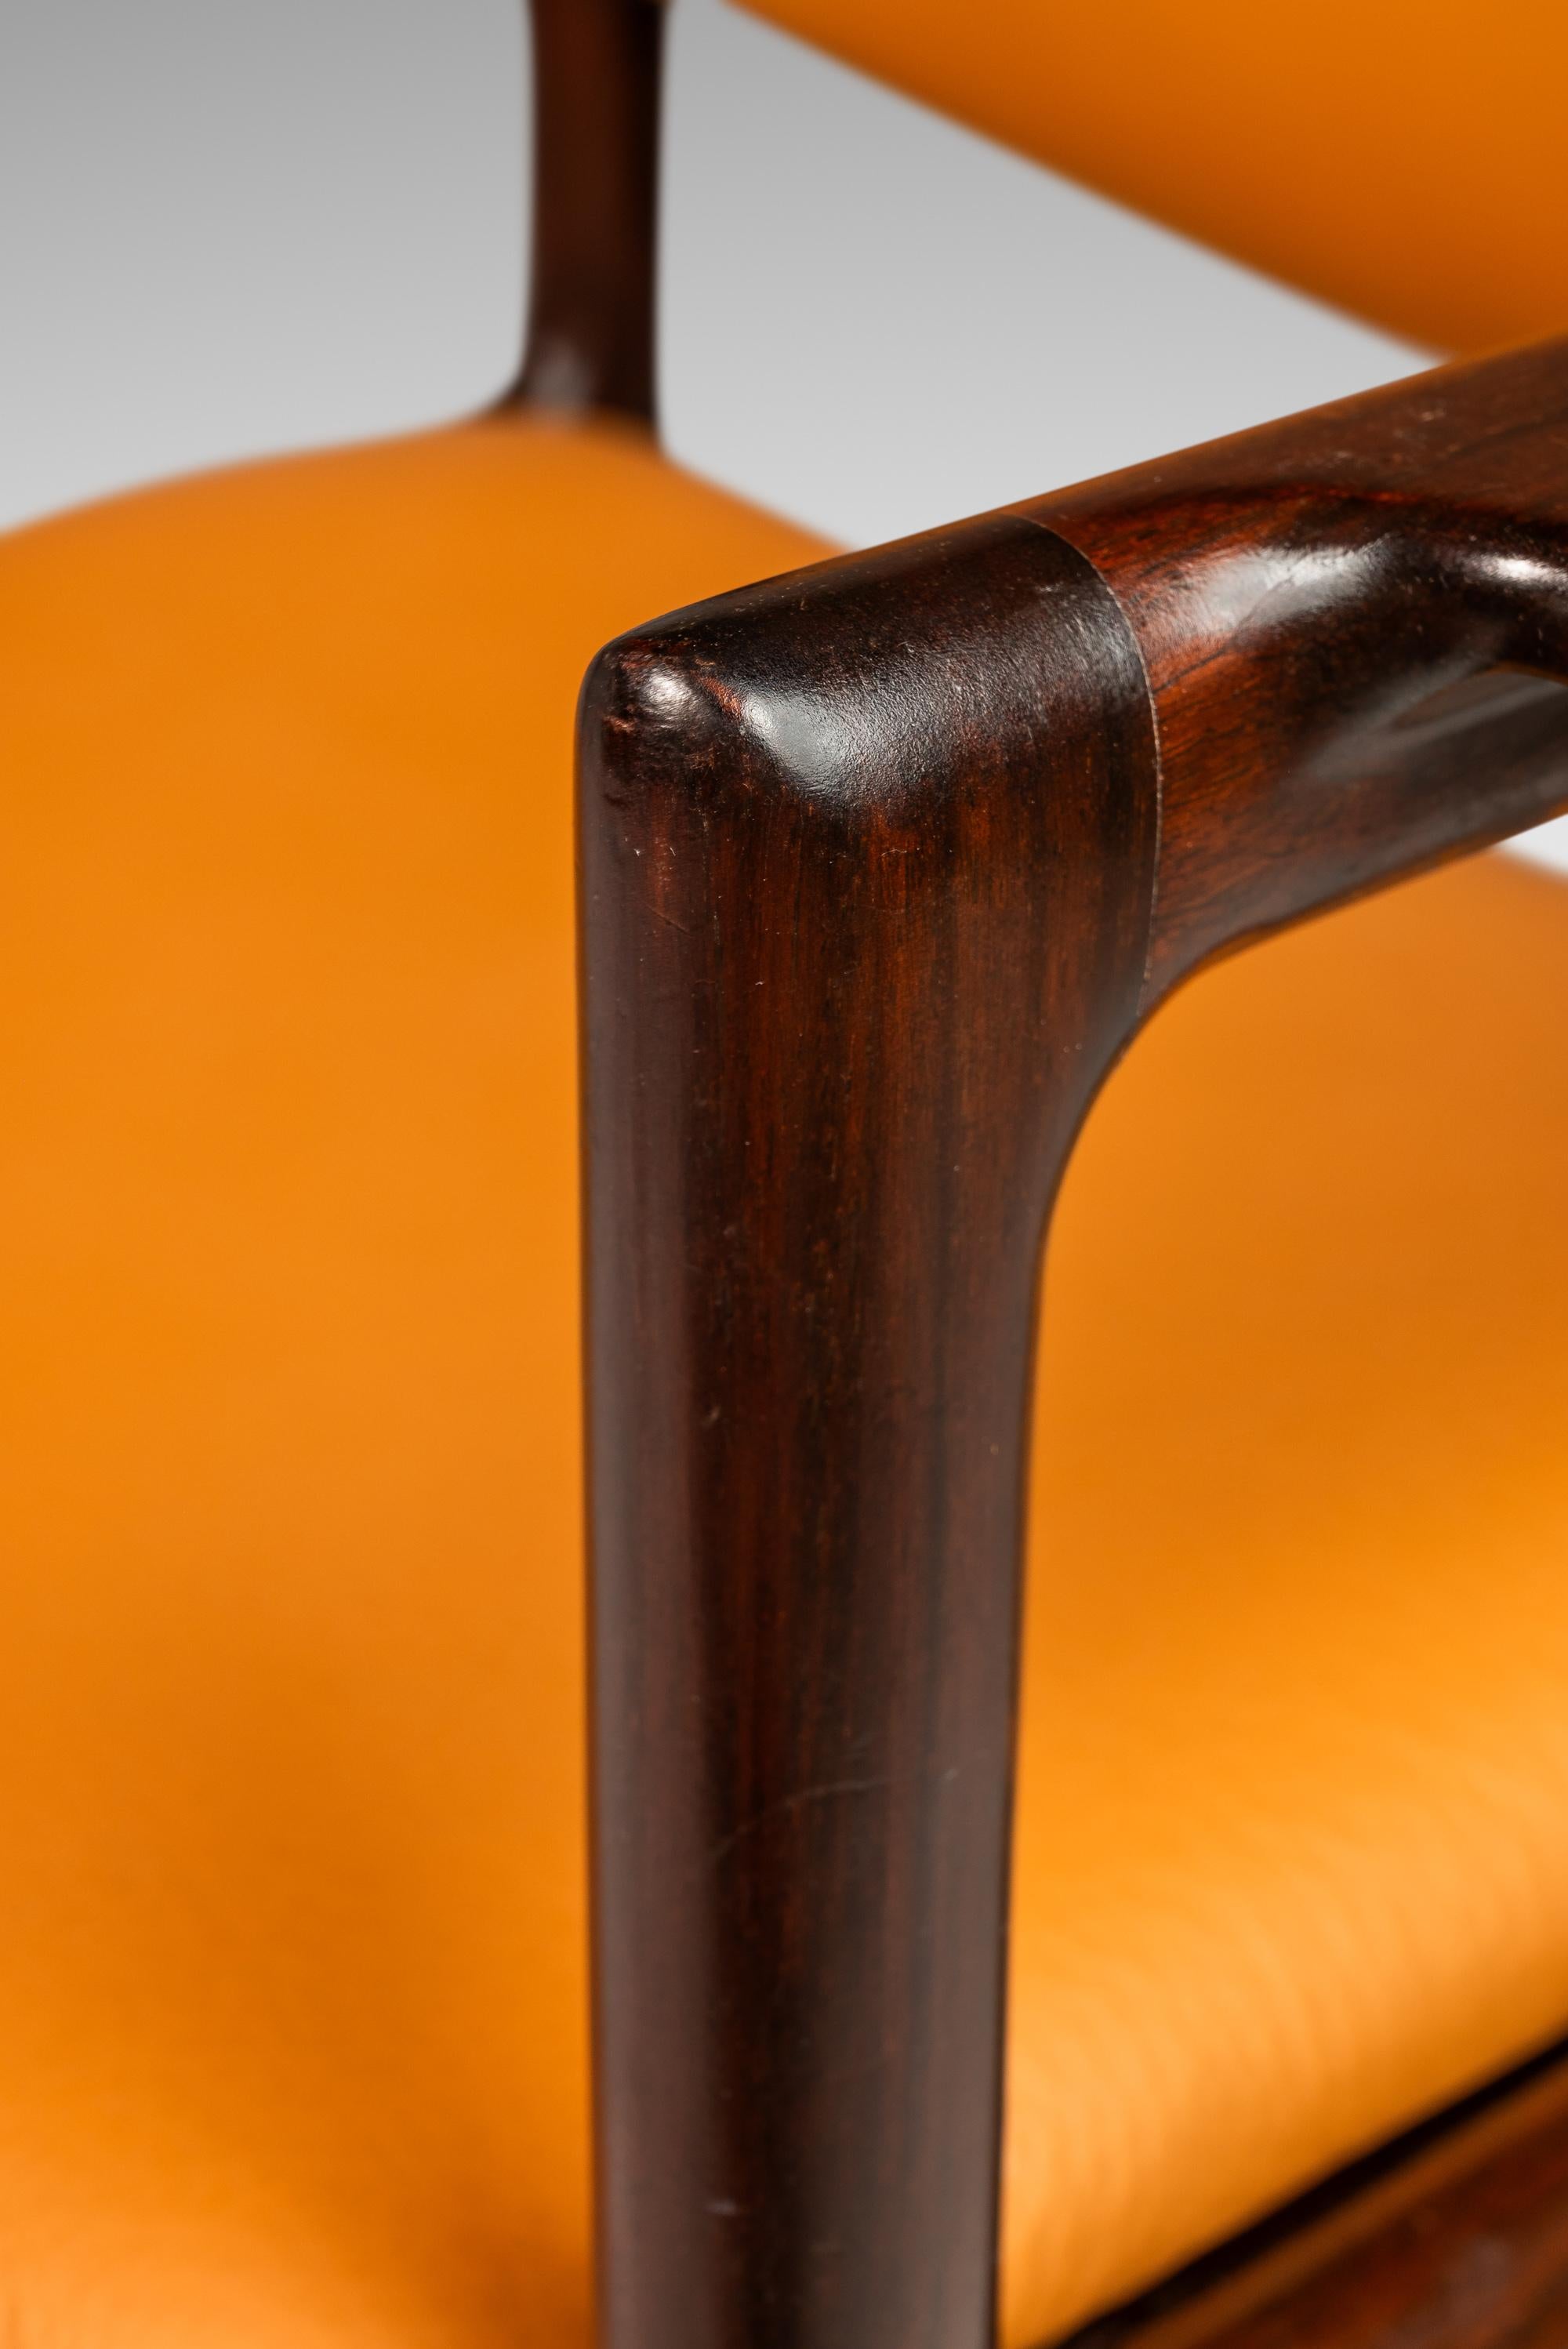 Danish Modern Mahogany & Leather Arm Chair, Danish Overseas Imports, c. 1960's For Sale 5